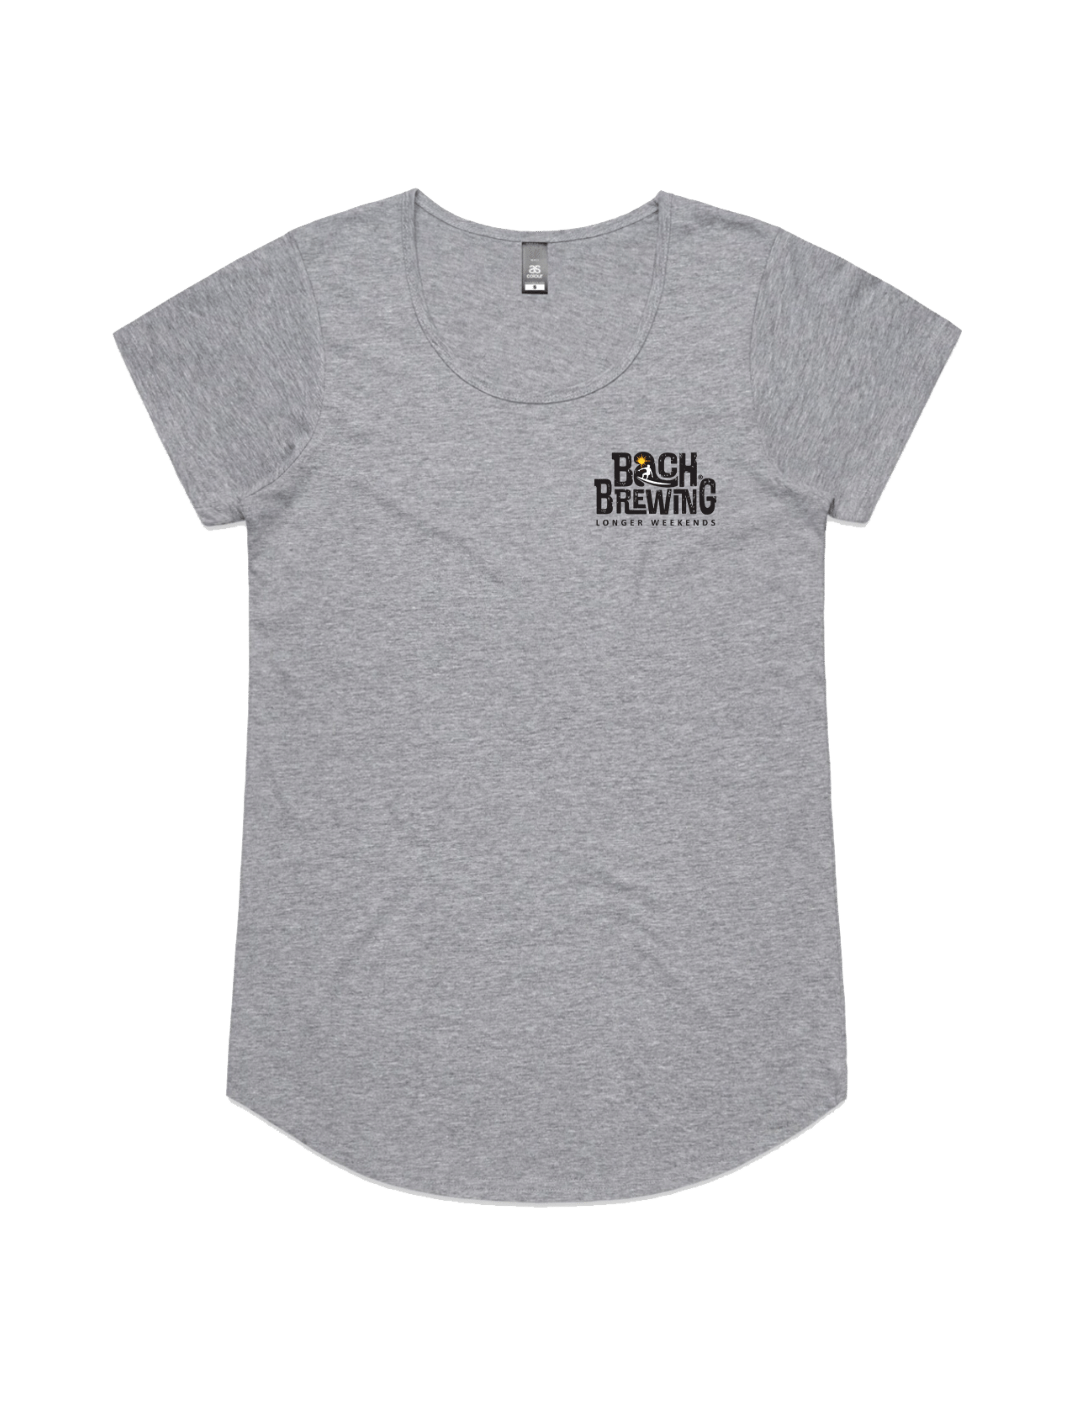 Bach Brewing Womens Short Sleeve T-shirt - Longer Weekends (back graphic)